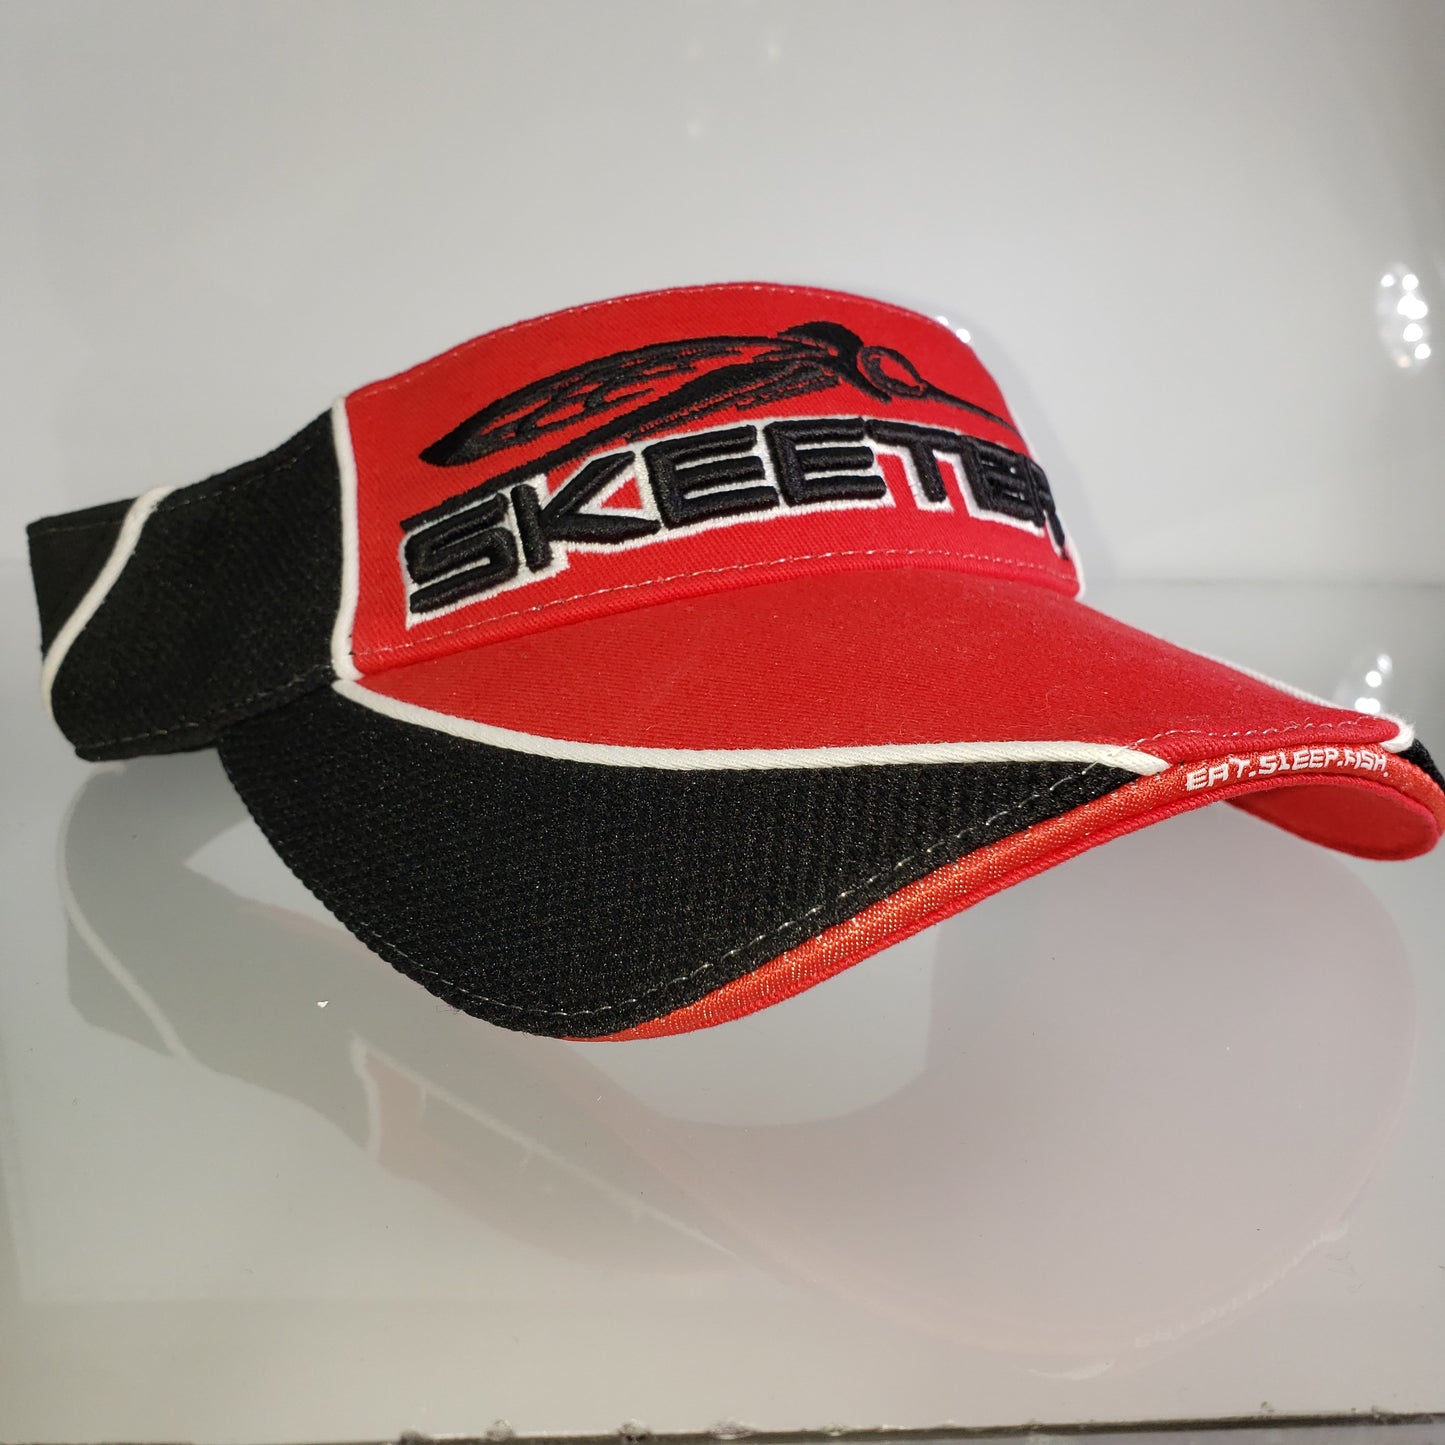 New Authentic Skeeter Visor Adjustable  Red/ Black Down Center/ Eat Sleep Fish on Band